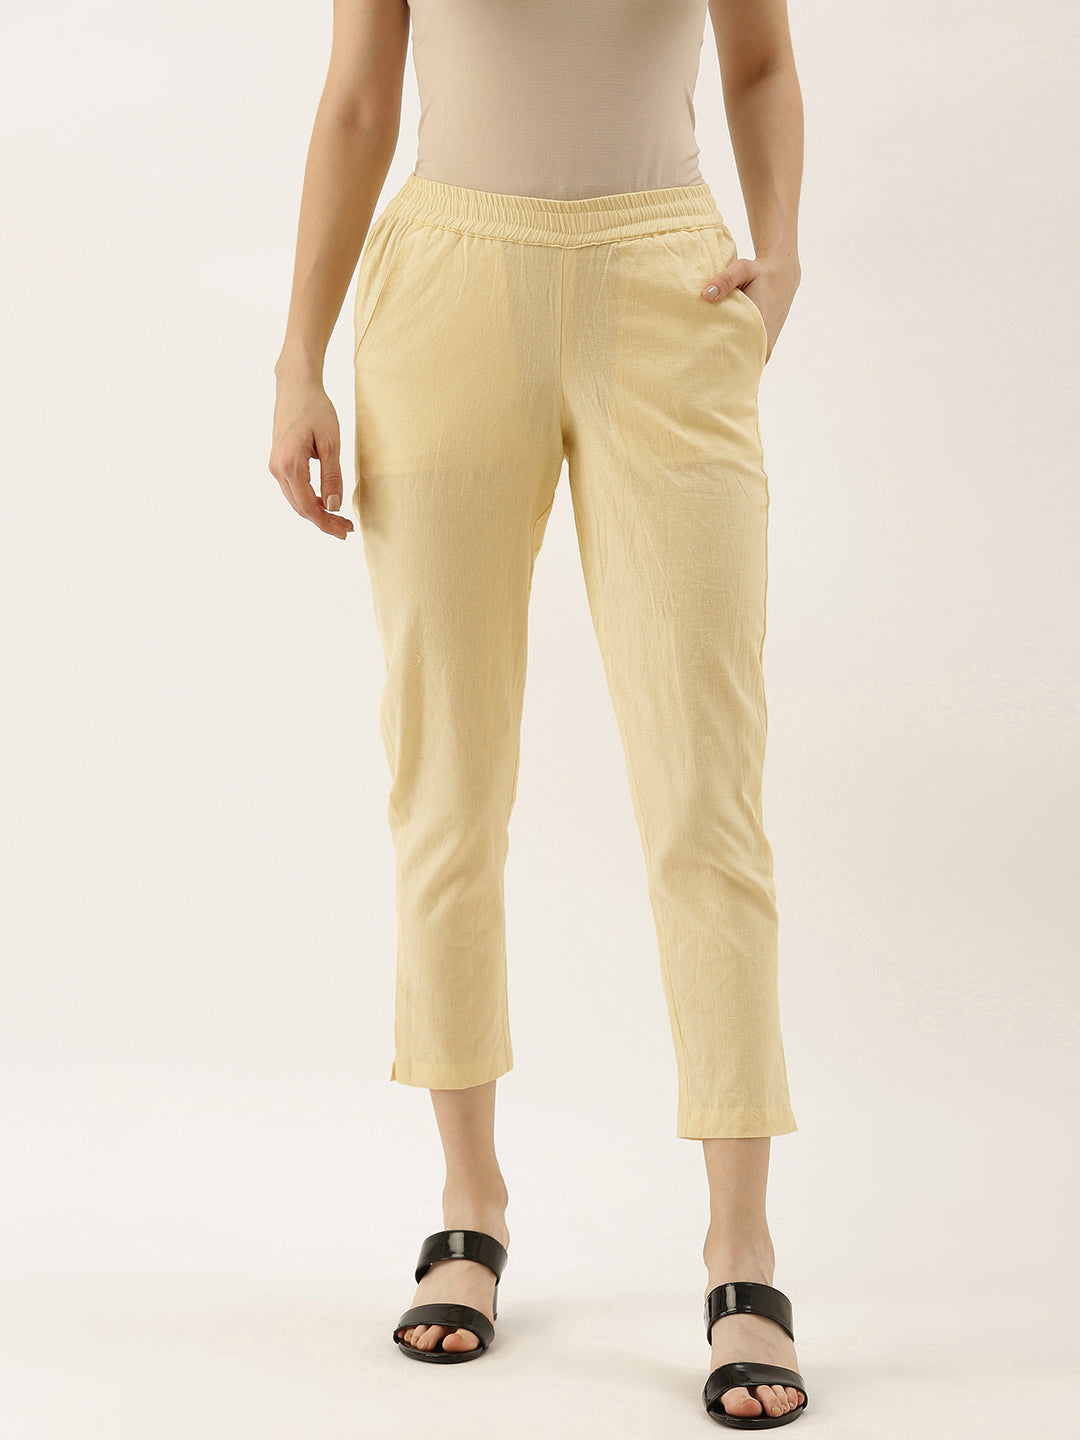 Buy 7STAR NX Solid Cotton Slub Cigarette Pant | Regular Fit Stretchable  Potli Pants/Cigarette/Trousers, Bundi Pants for Women, Girls (32, Cream) at  Amazon.in